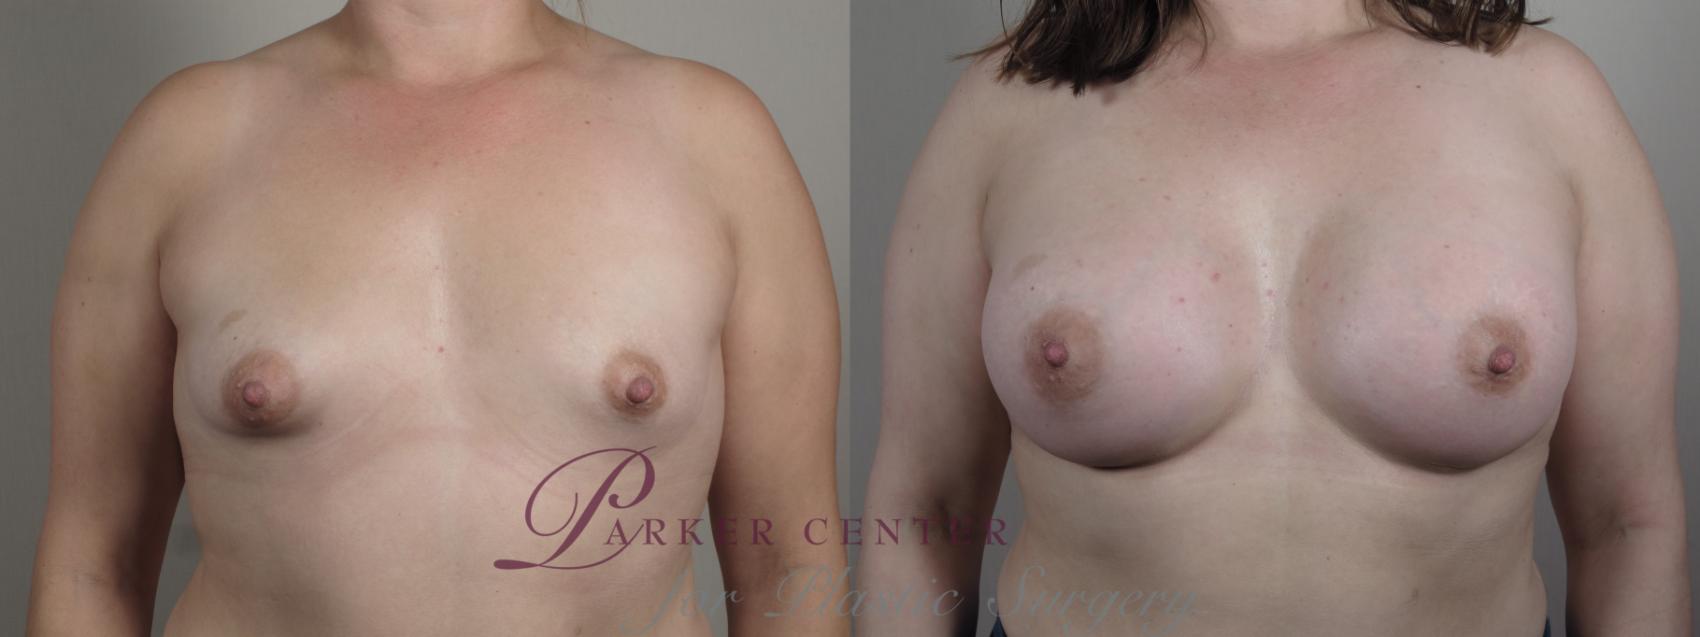 Breast Augmentation Case 1008 Before & After Front | Paramus, NJ | Parker Center for Plastic Surgery